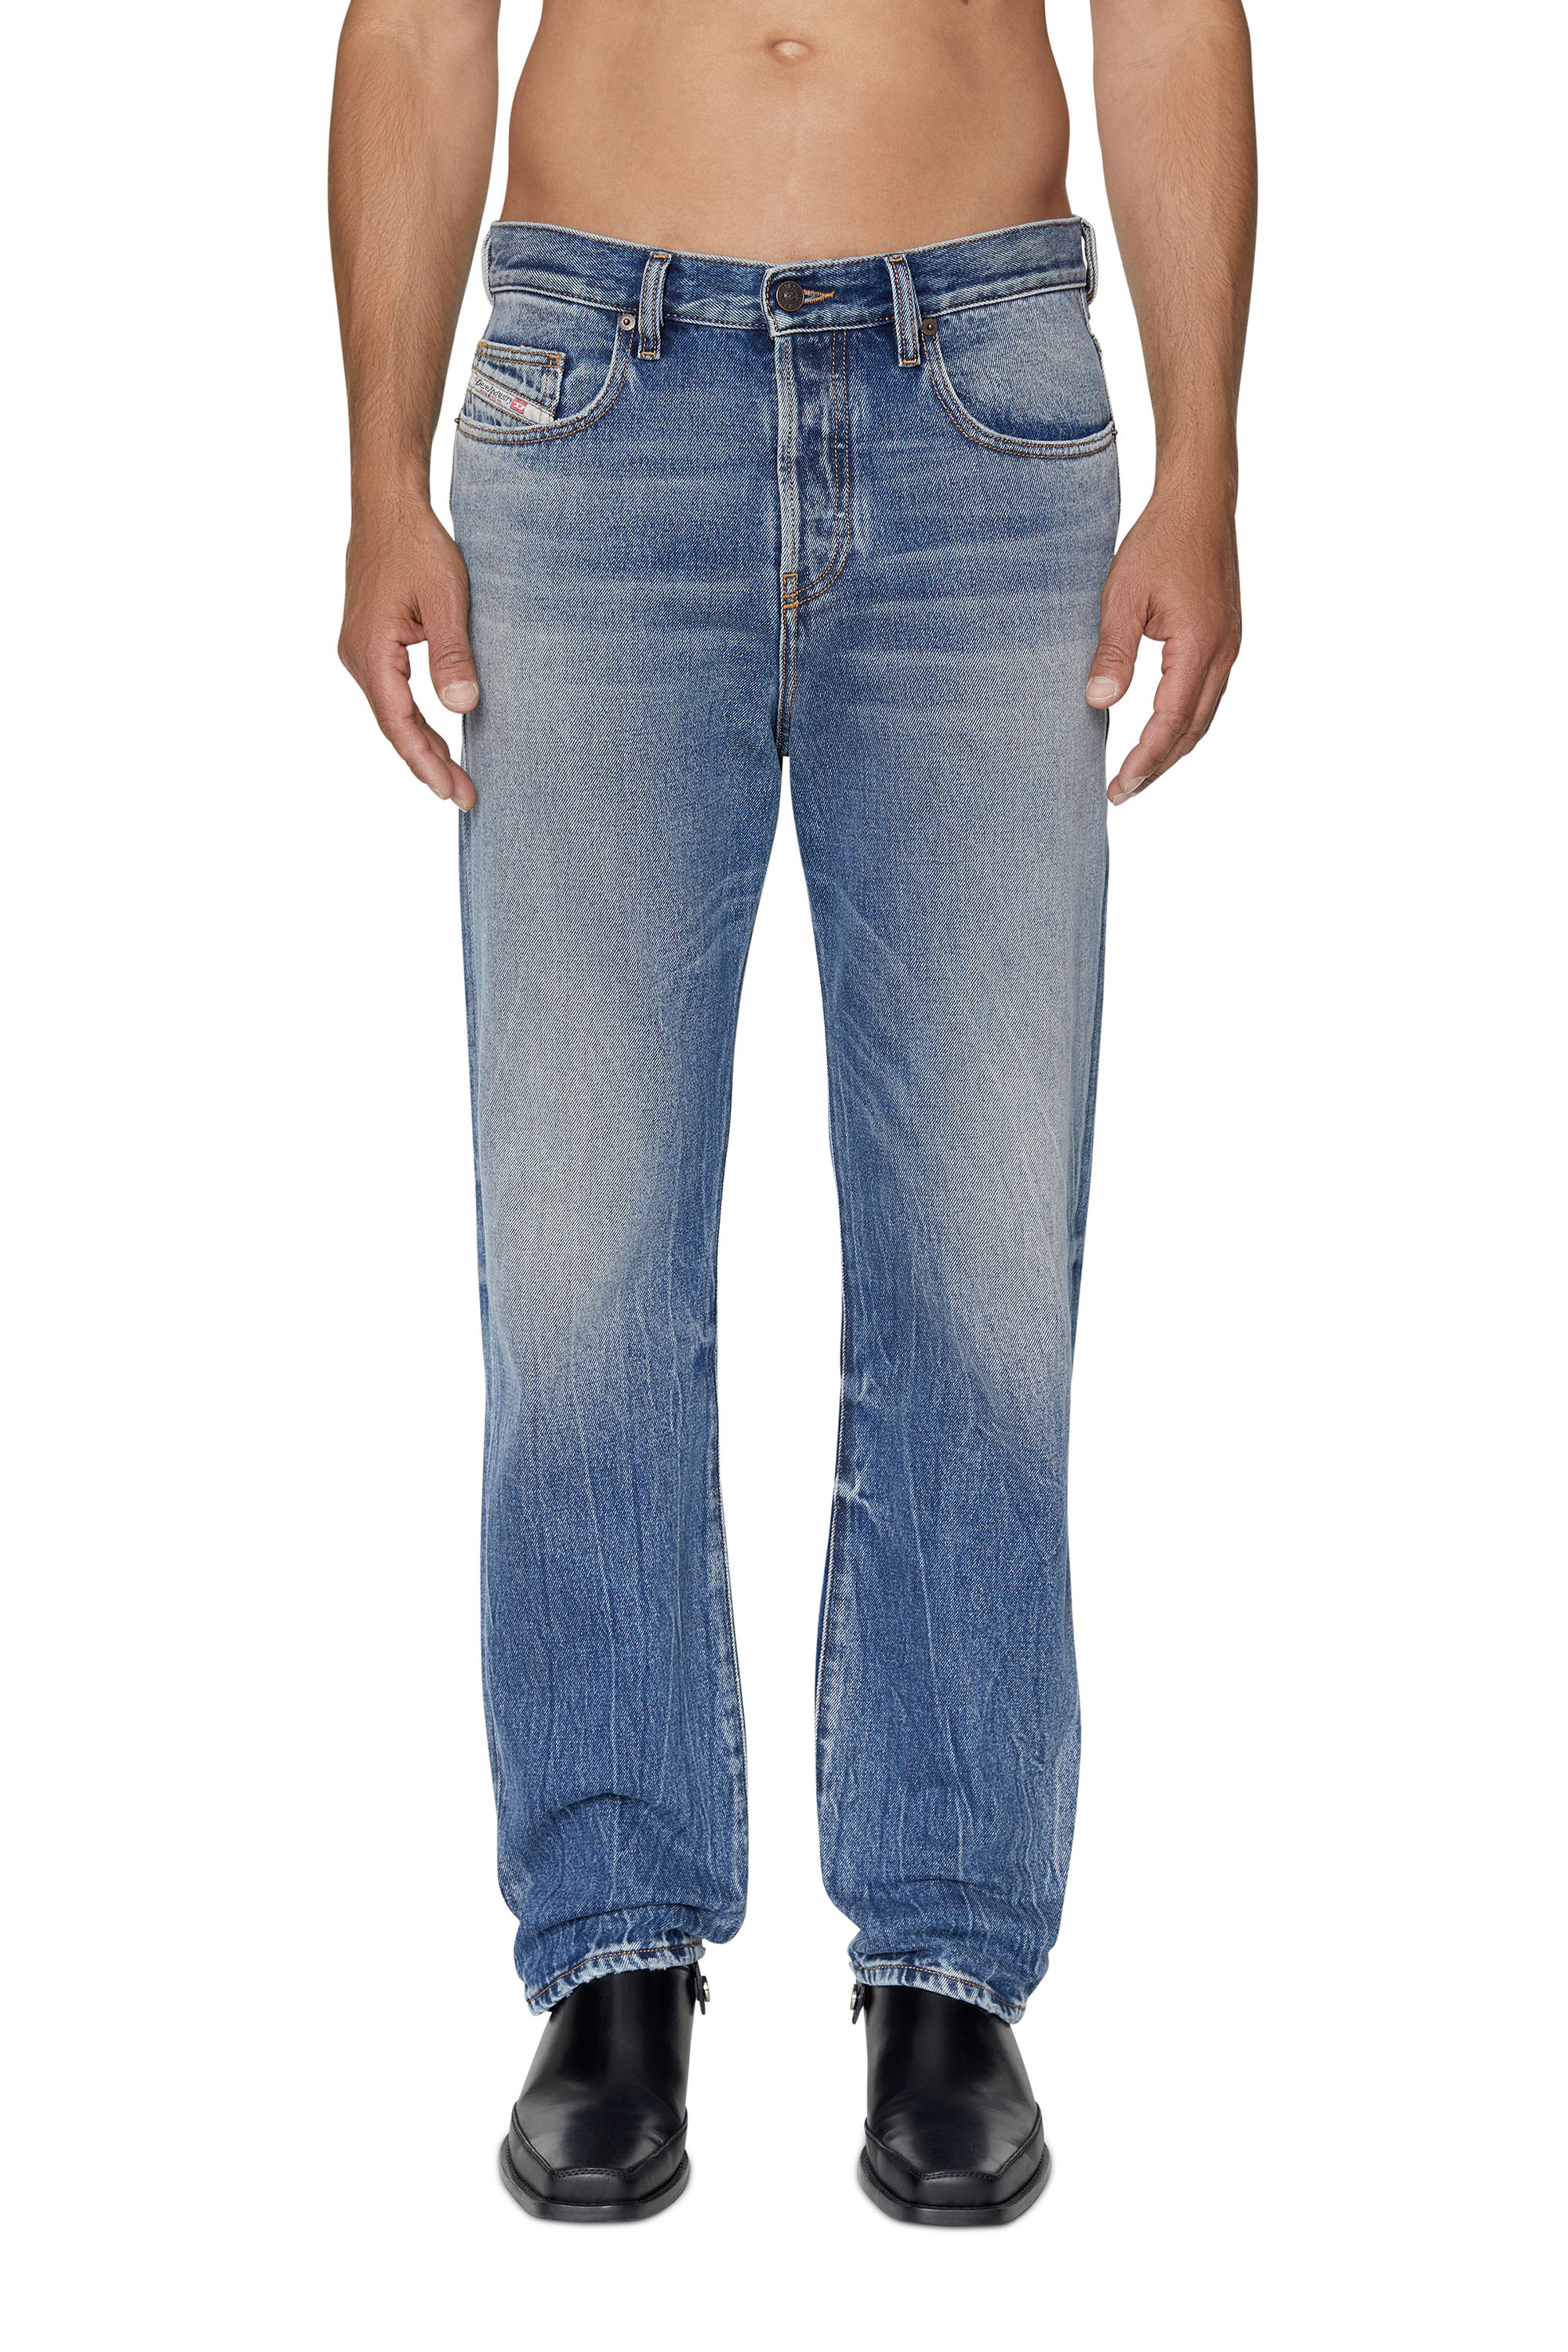 2020 D-VIKER 09D55 Straight Jeans, Mittelblau - Jeans